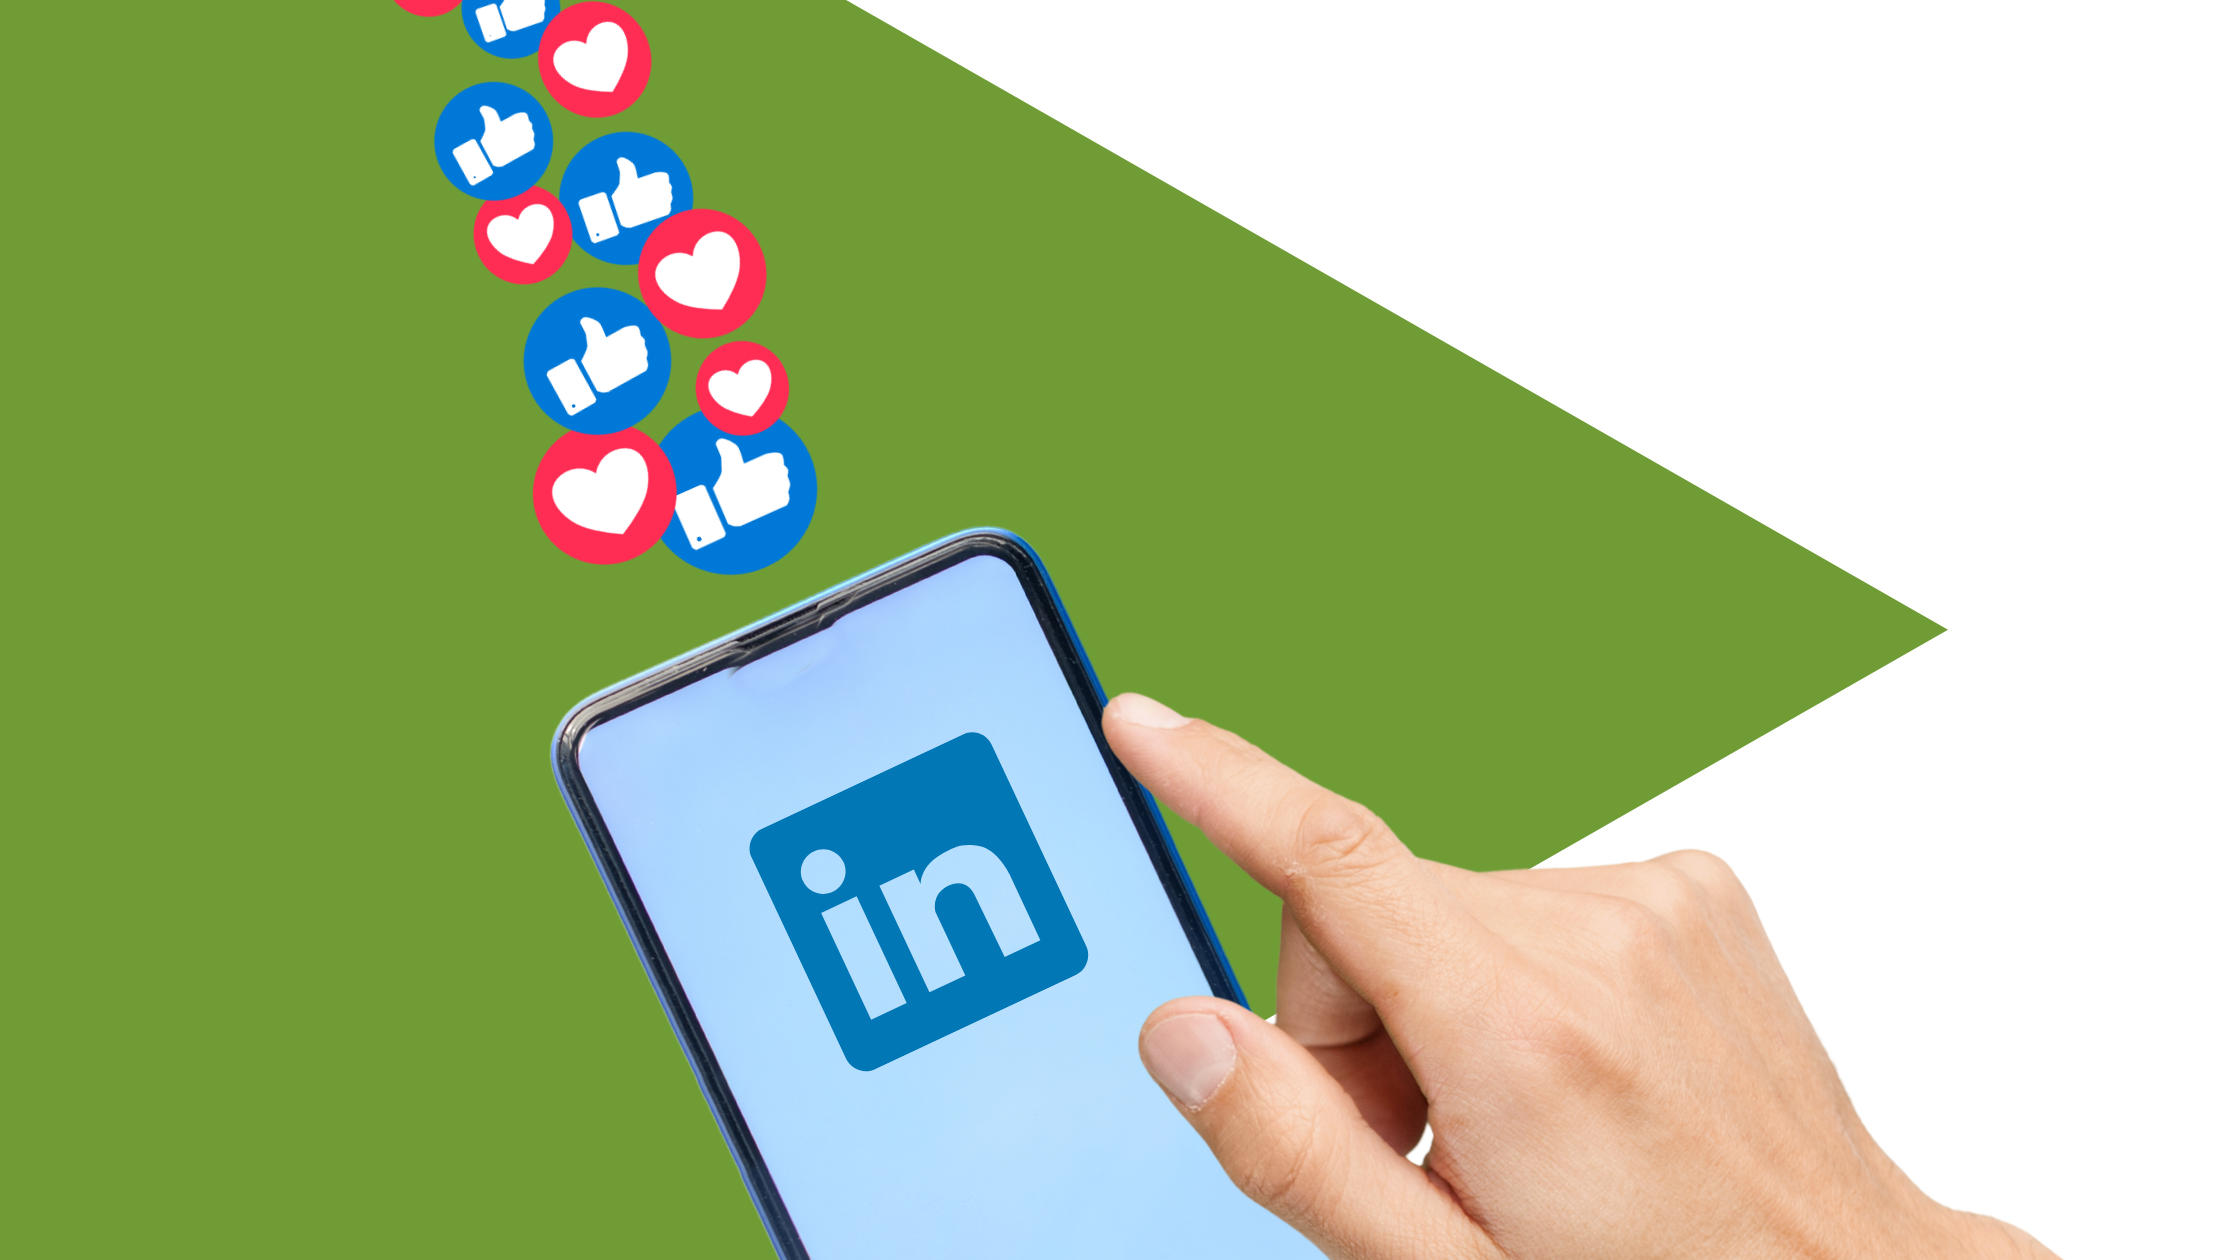 LinkedIn profile – your personal brand